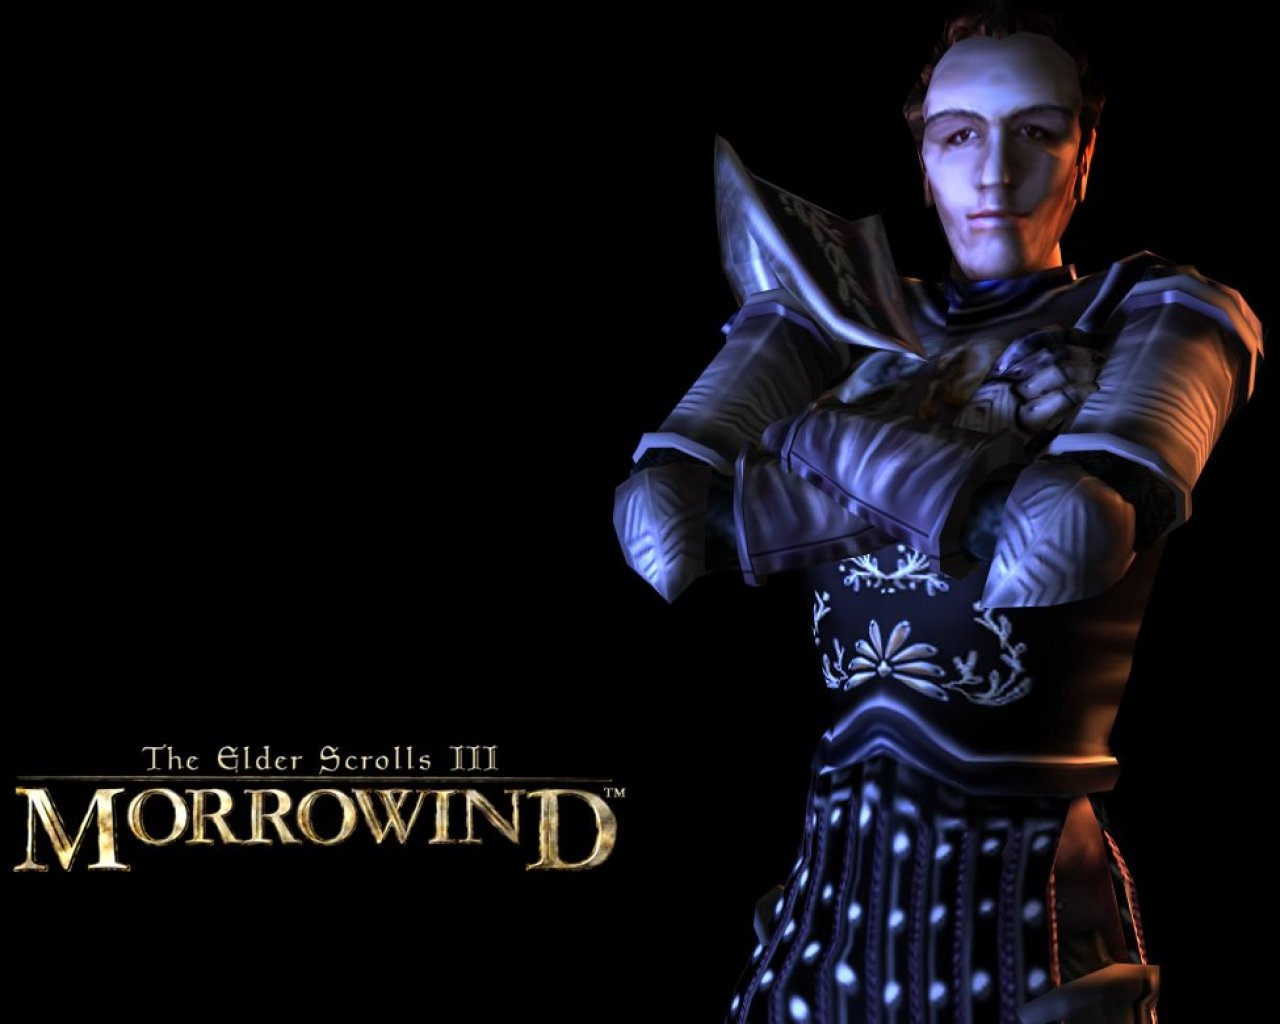 Wallpaper The Elder Scrolls III: Morrowind "Security"